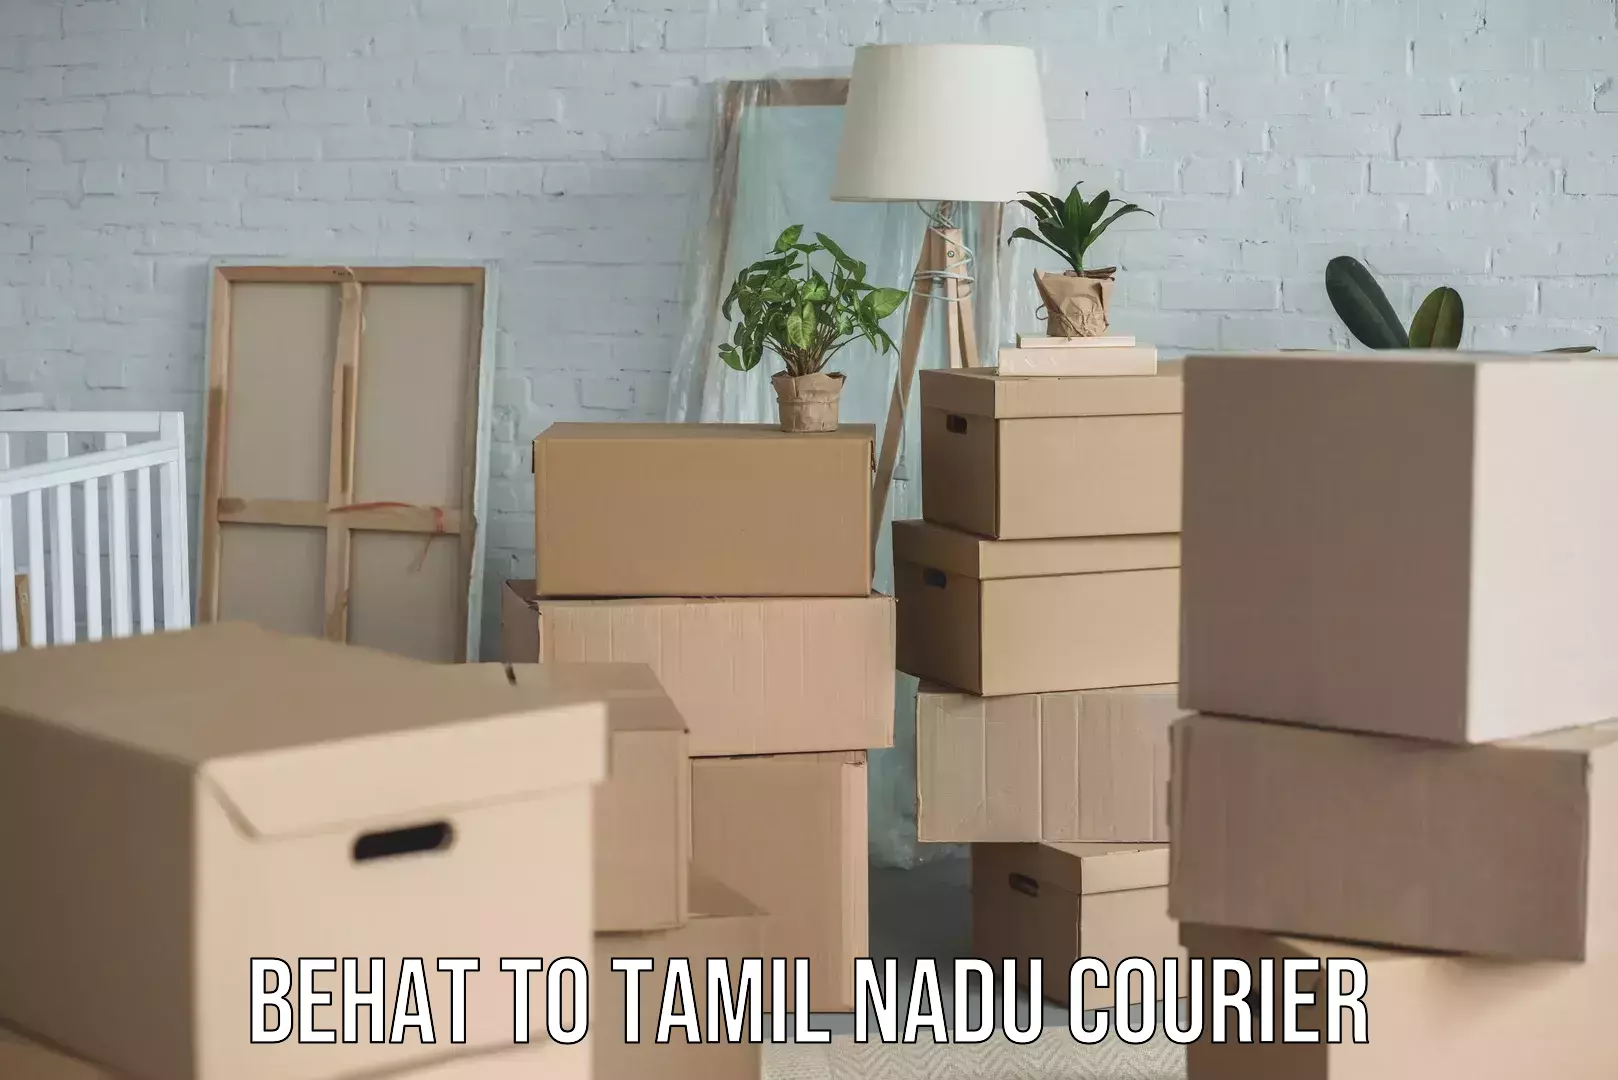 Return courier service in Behat to Tamil Nadu